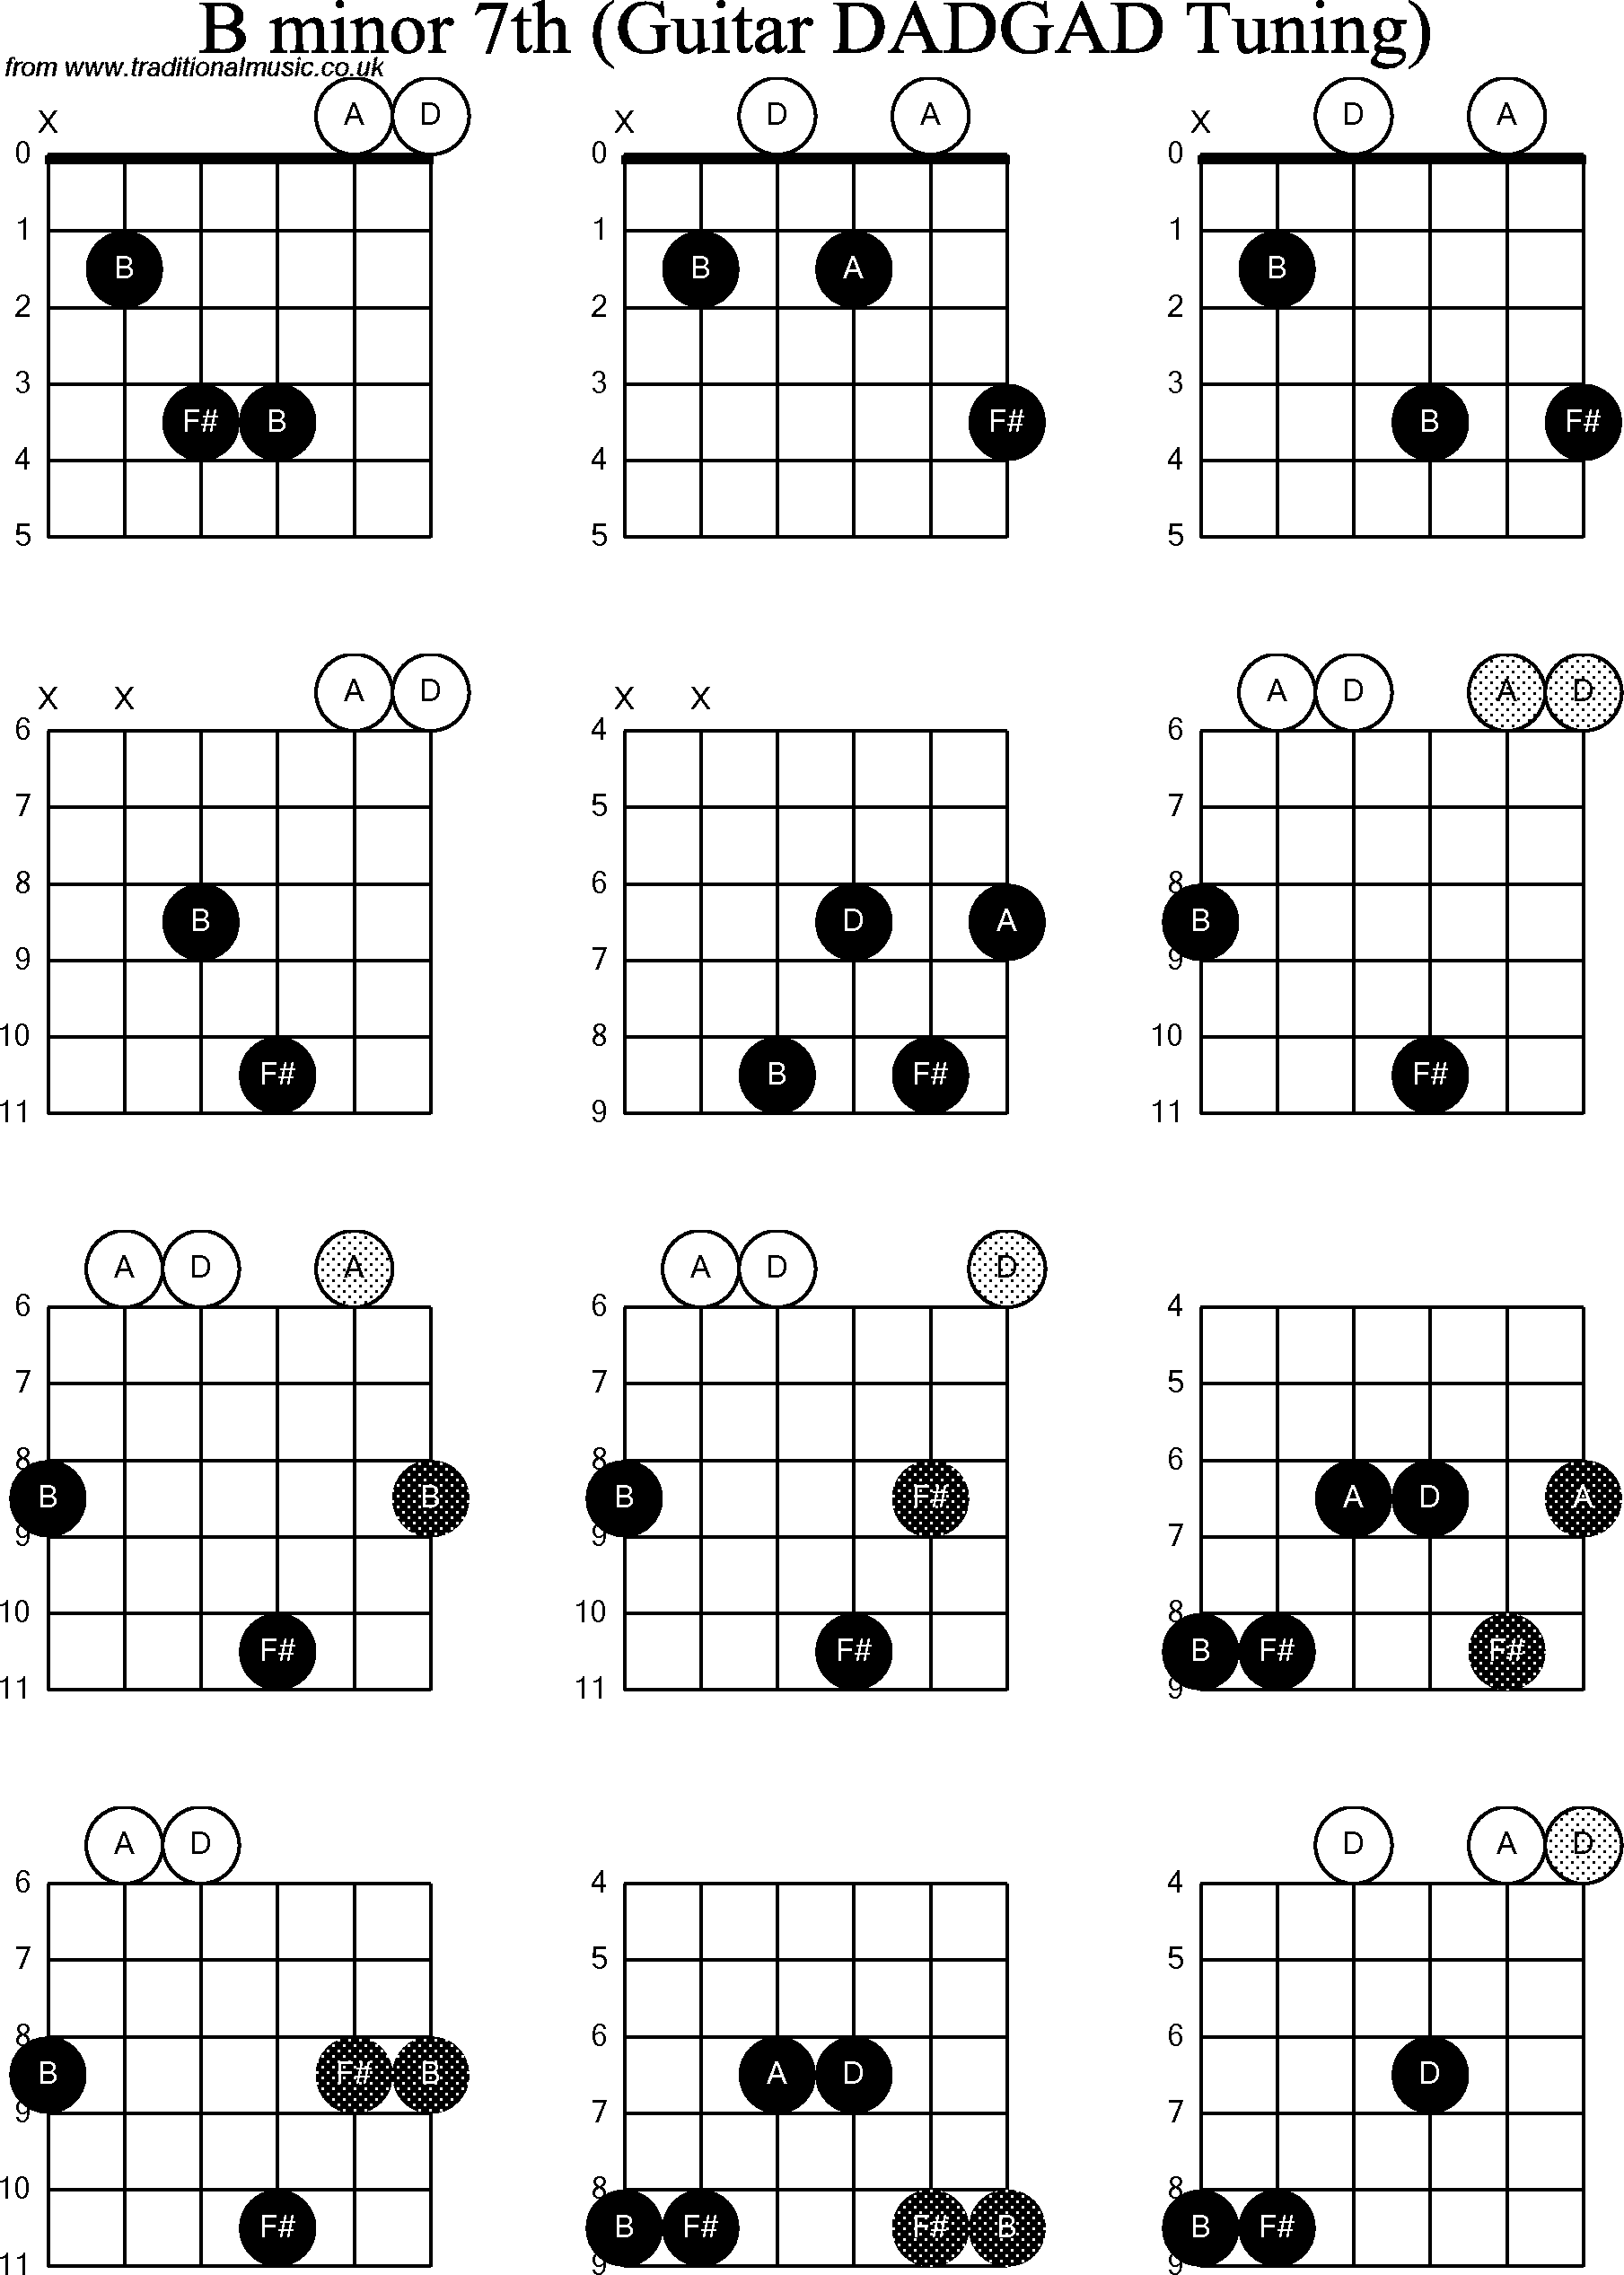 Chord Diagrams for D Modal Guitar(DADGAD), B Minor7th